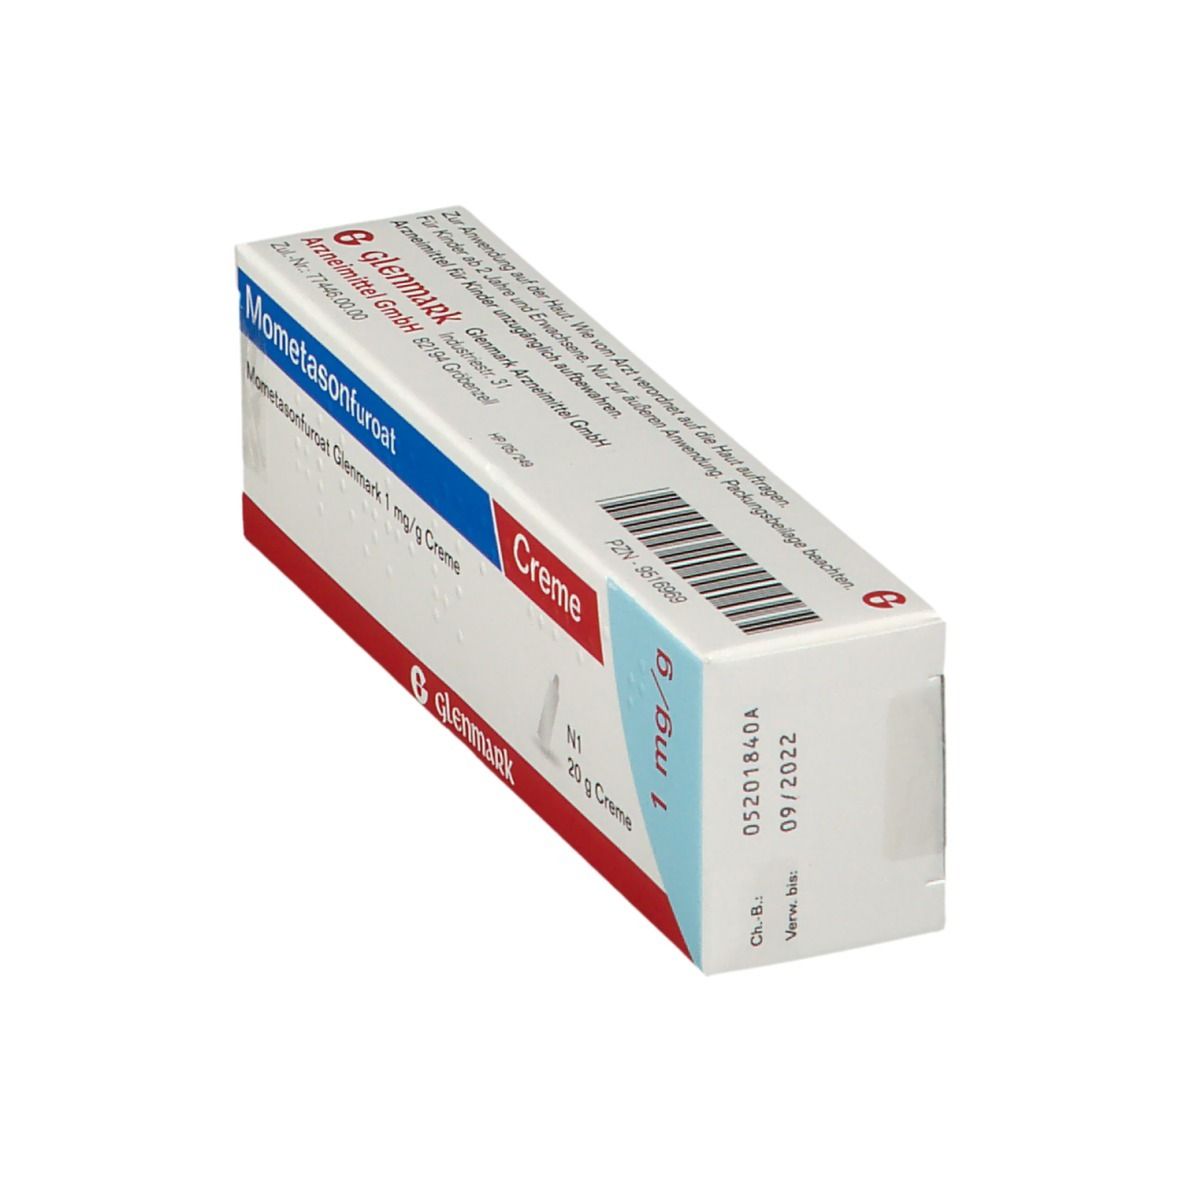 Mometasonfuroat Glenmark 1 mg/g